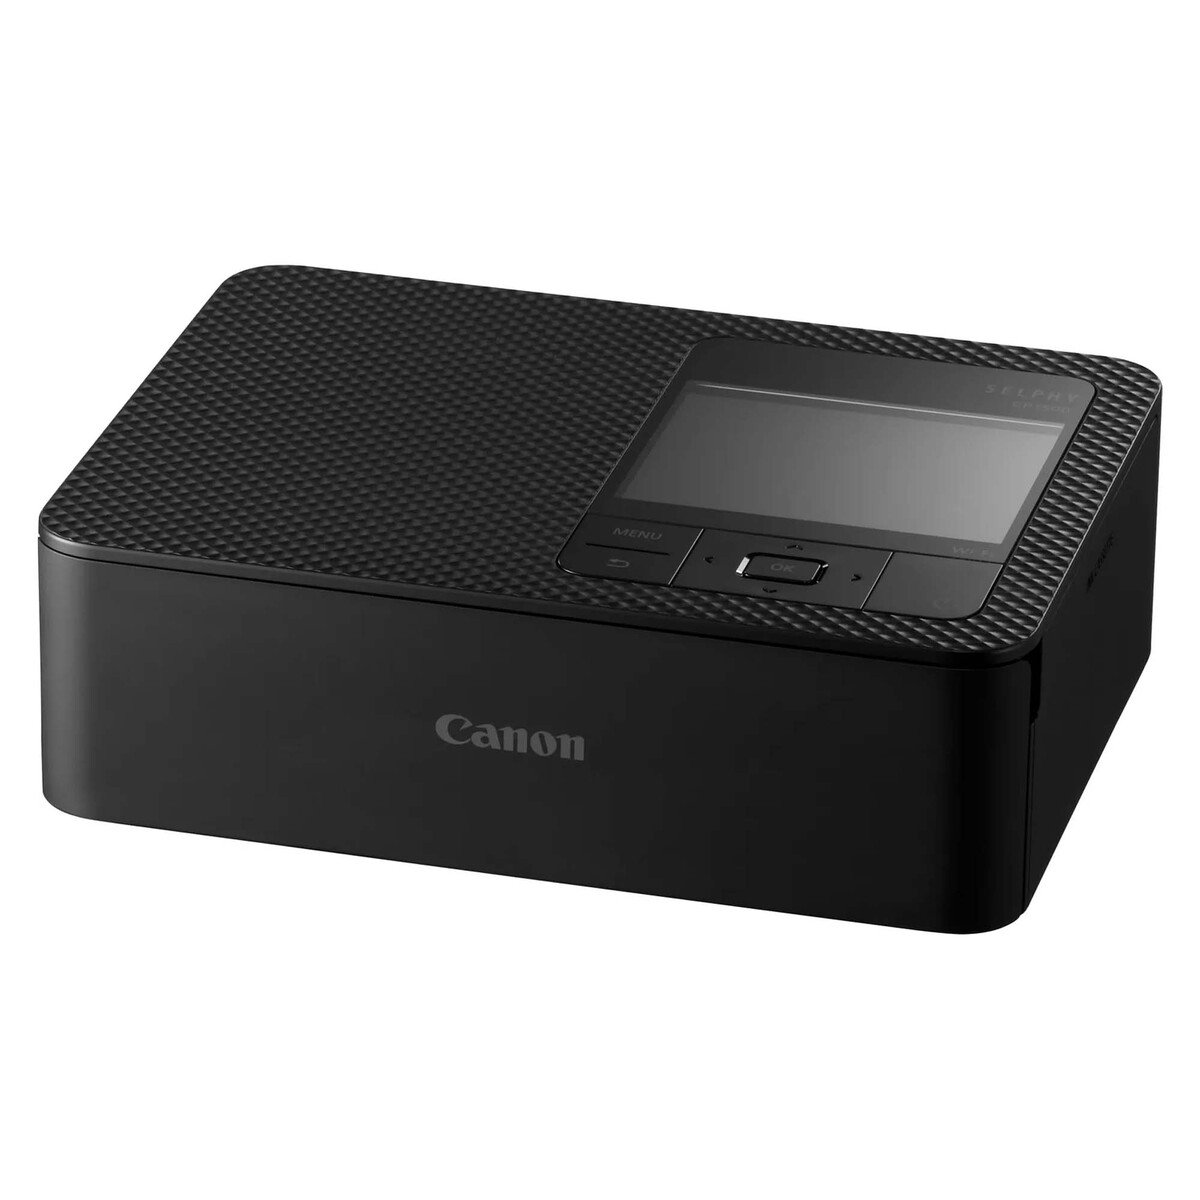 Canon SELPHY CP1500 Colour Portable Photo Printer - Black + Canon RP-108 Colour Ink + 100 x 148 mm Paper Set, 108 Sheets